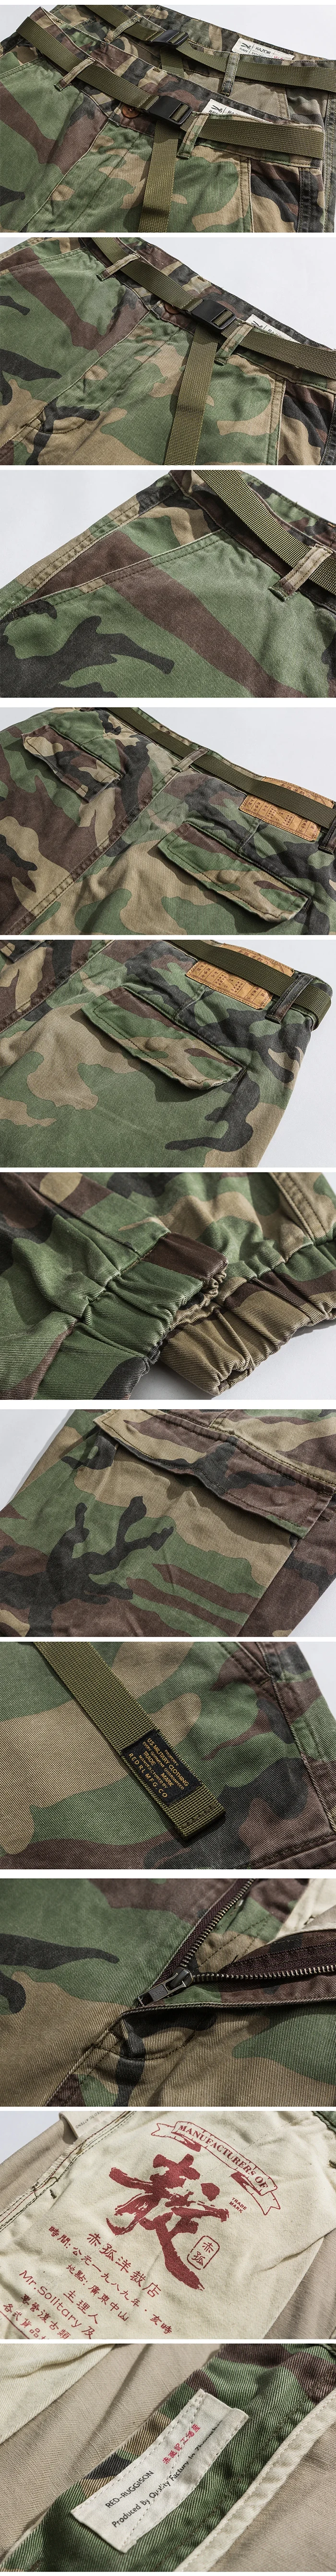 details of the Camo cargo pants streetwear "Shibu"